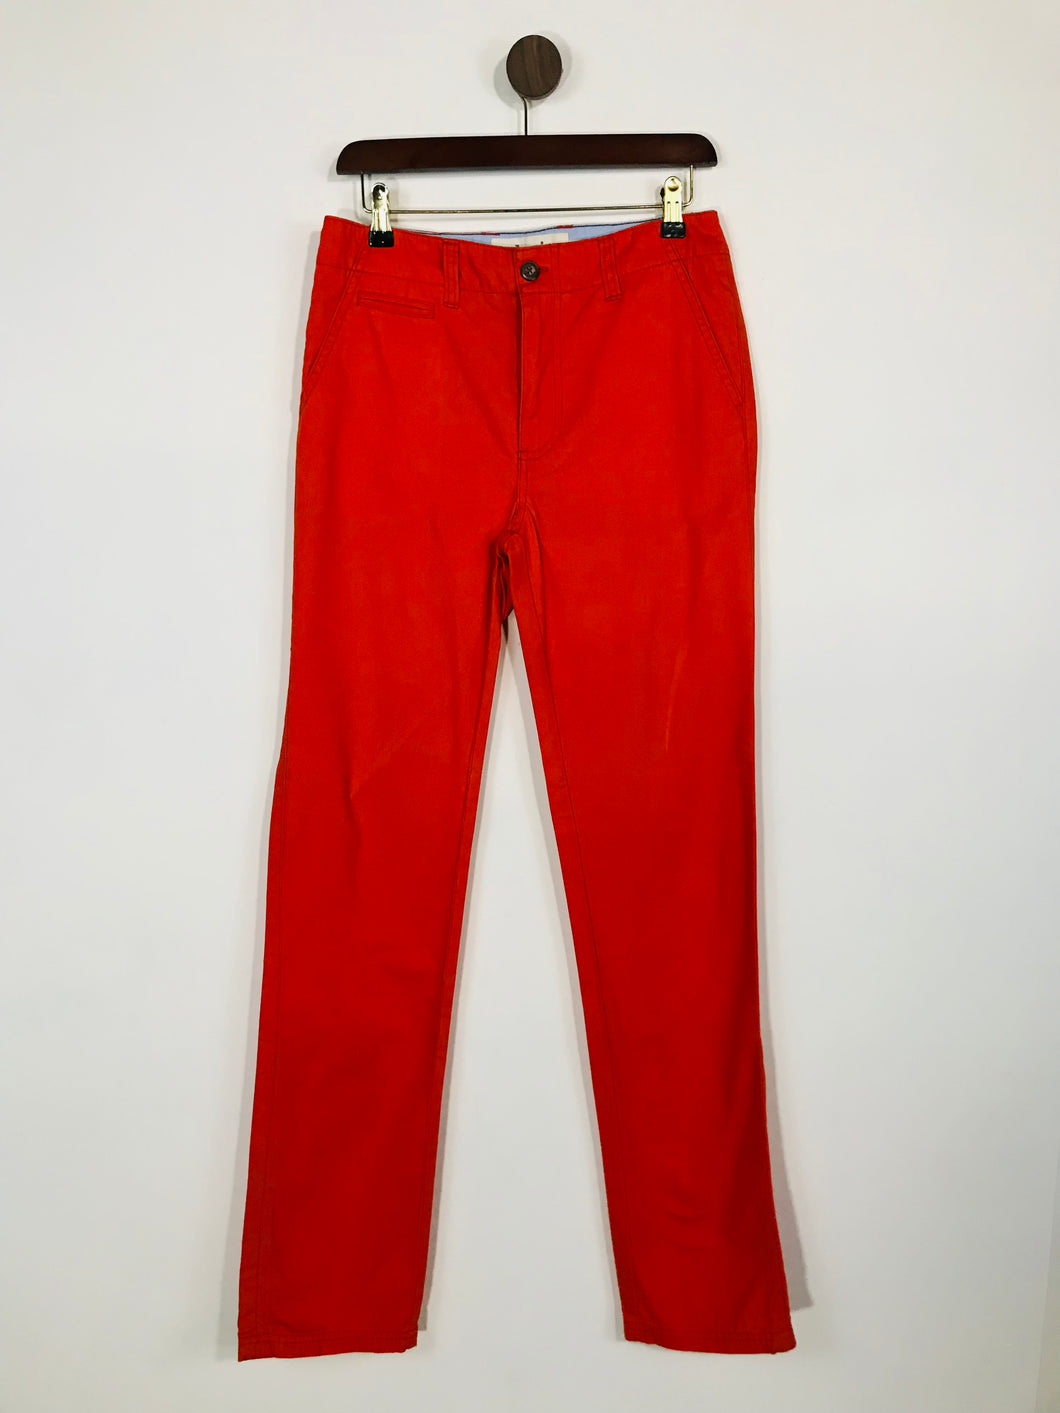 Boden Kid's Cotton Chinos Trousers | W30 L | Orange